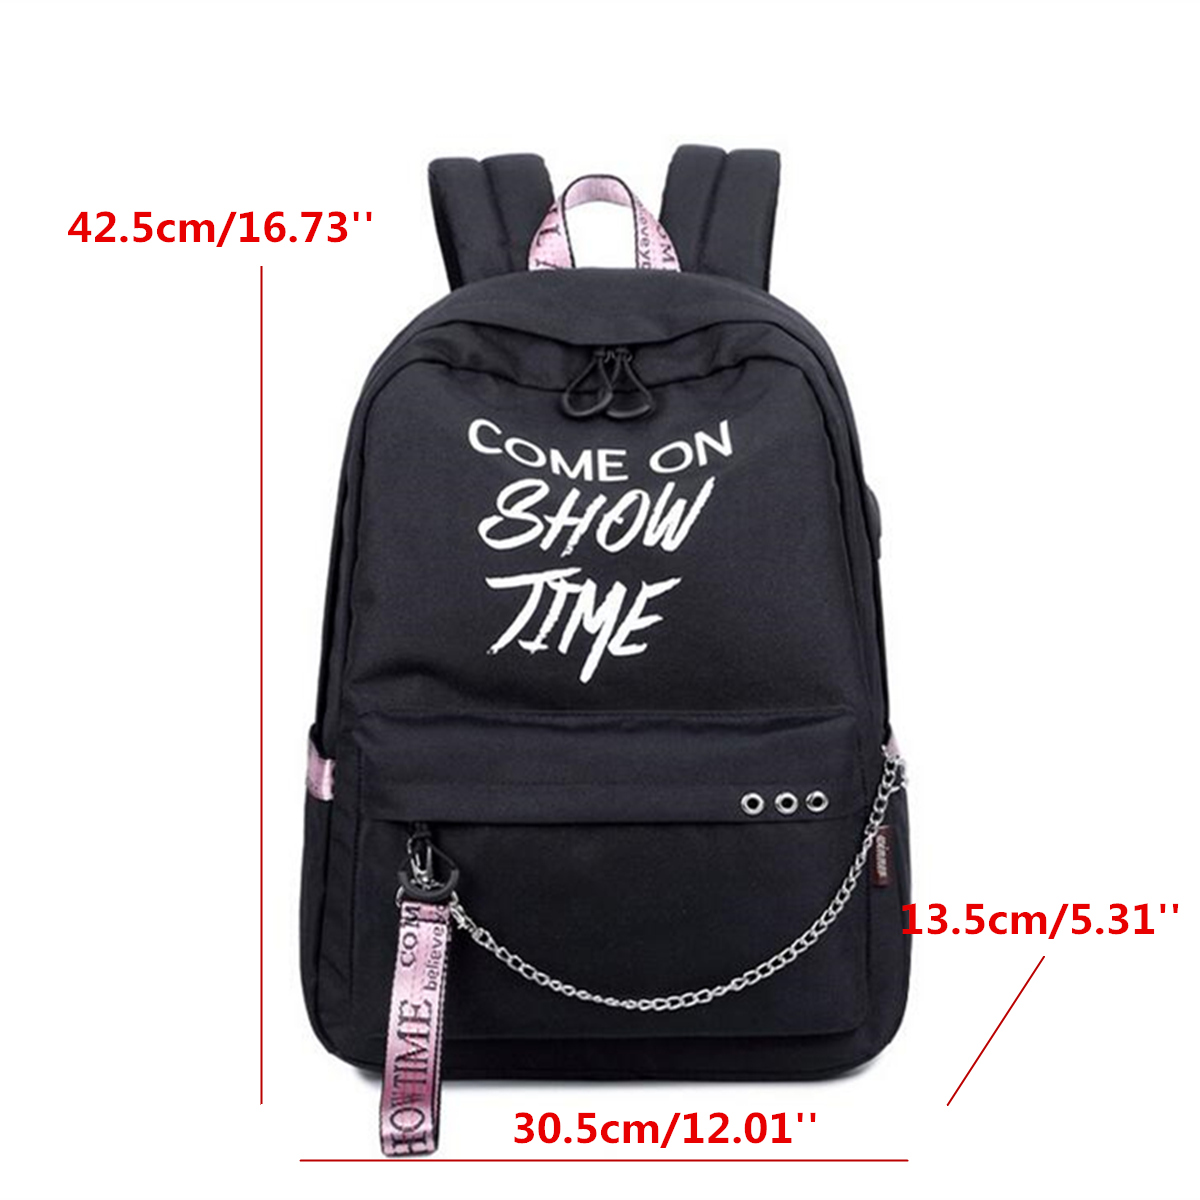 156-Inch-Anti-Theft-Laptop-USB-Backpack-Luminous-Outdoor-Travel-School-Bag-Men-Women-1332274-10